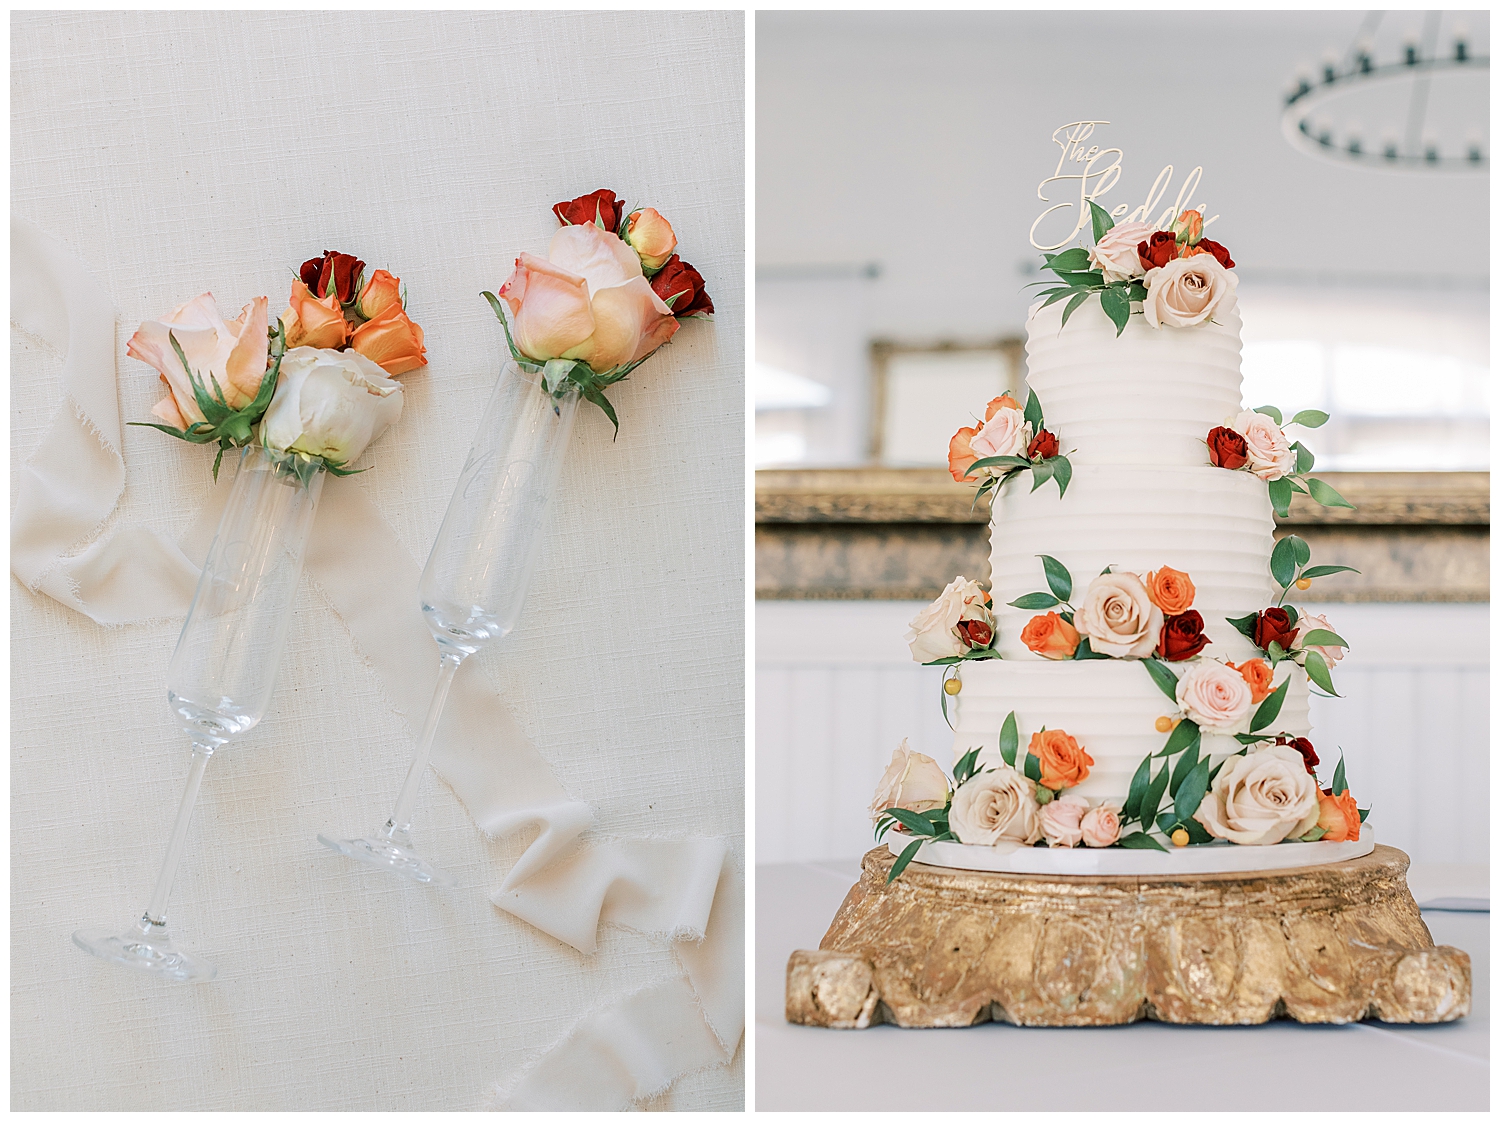 Flowers sit on the wedding cake.